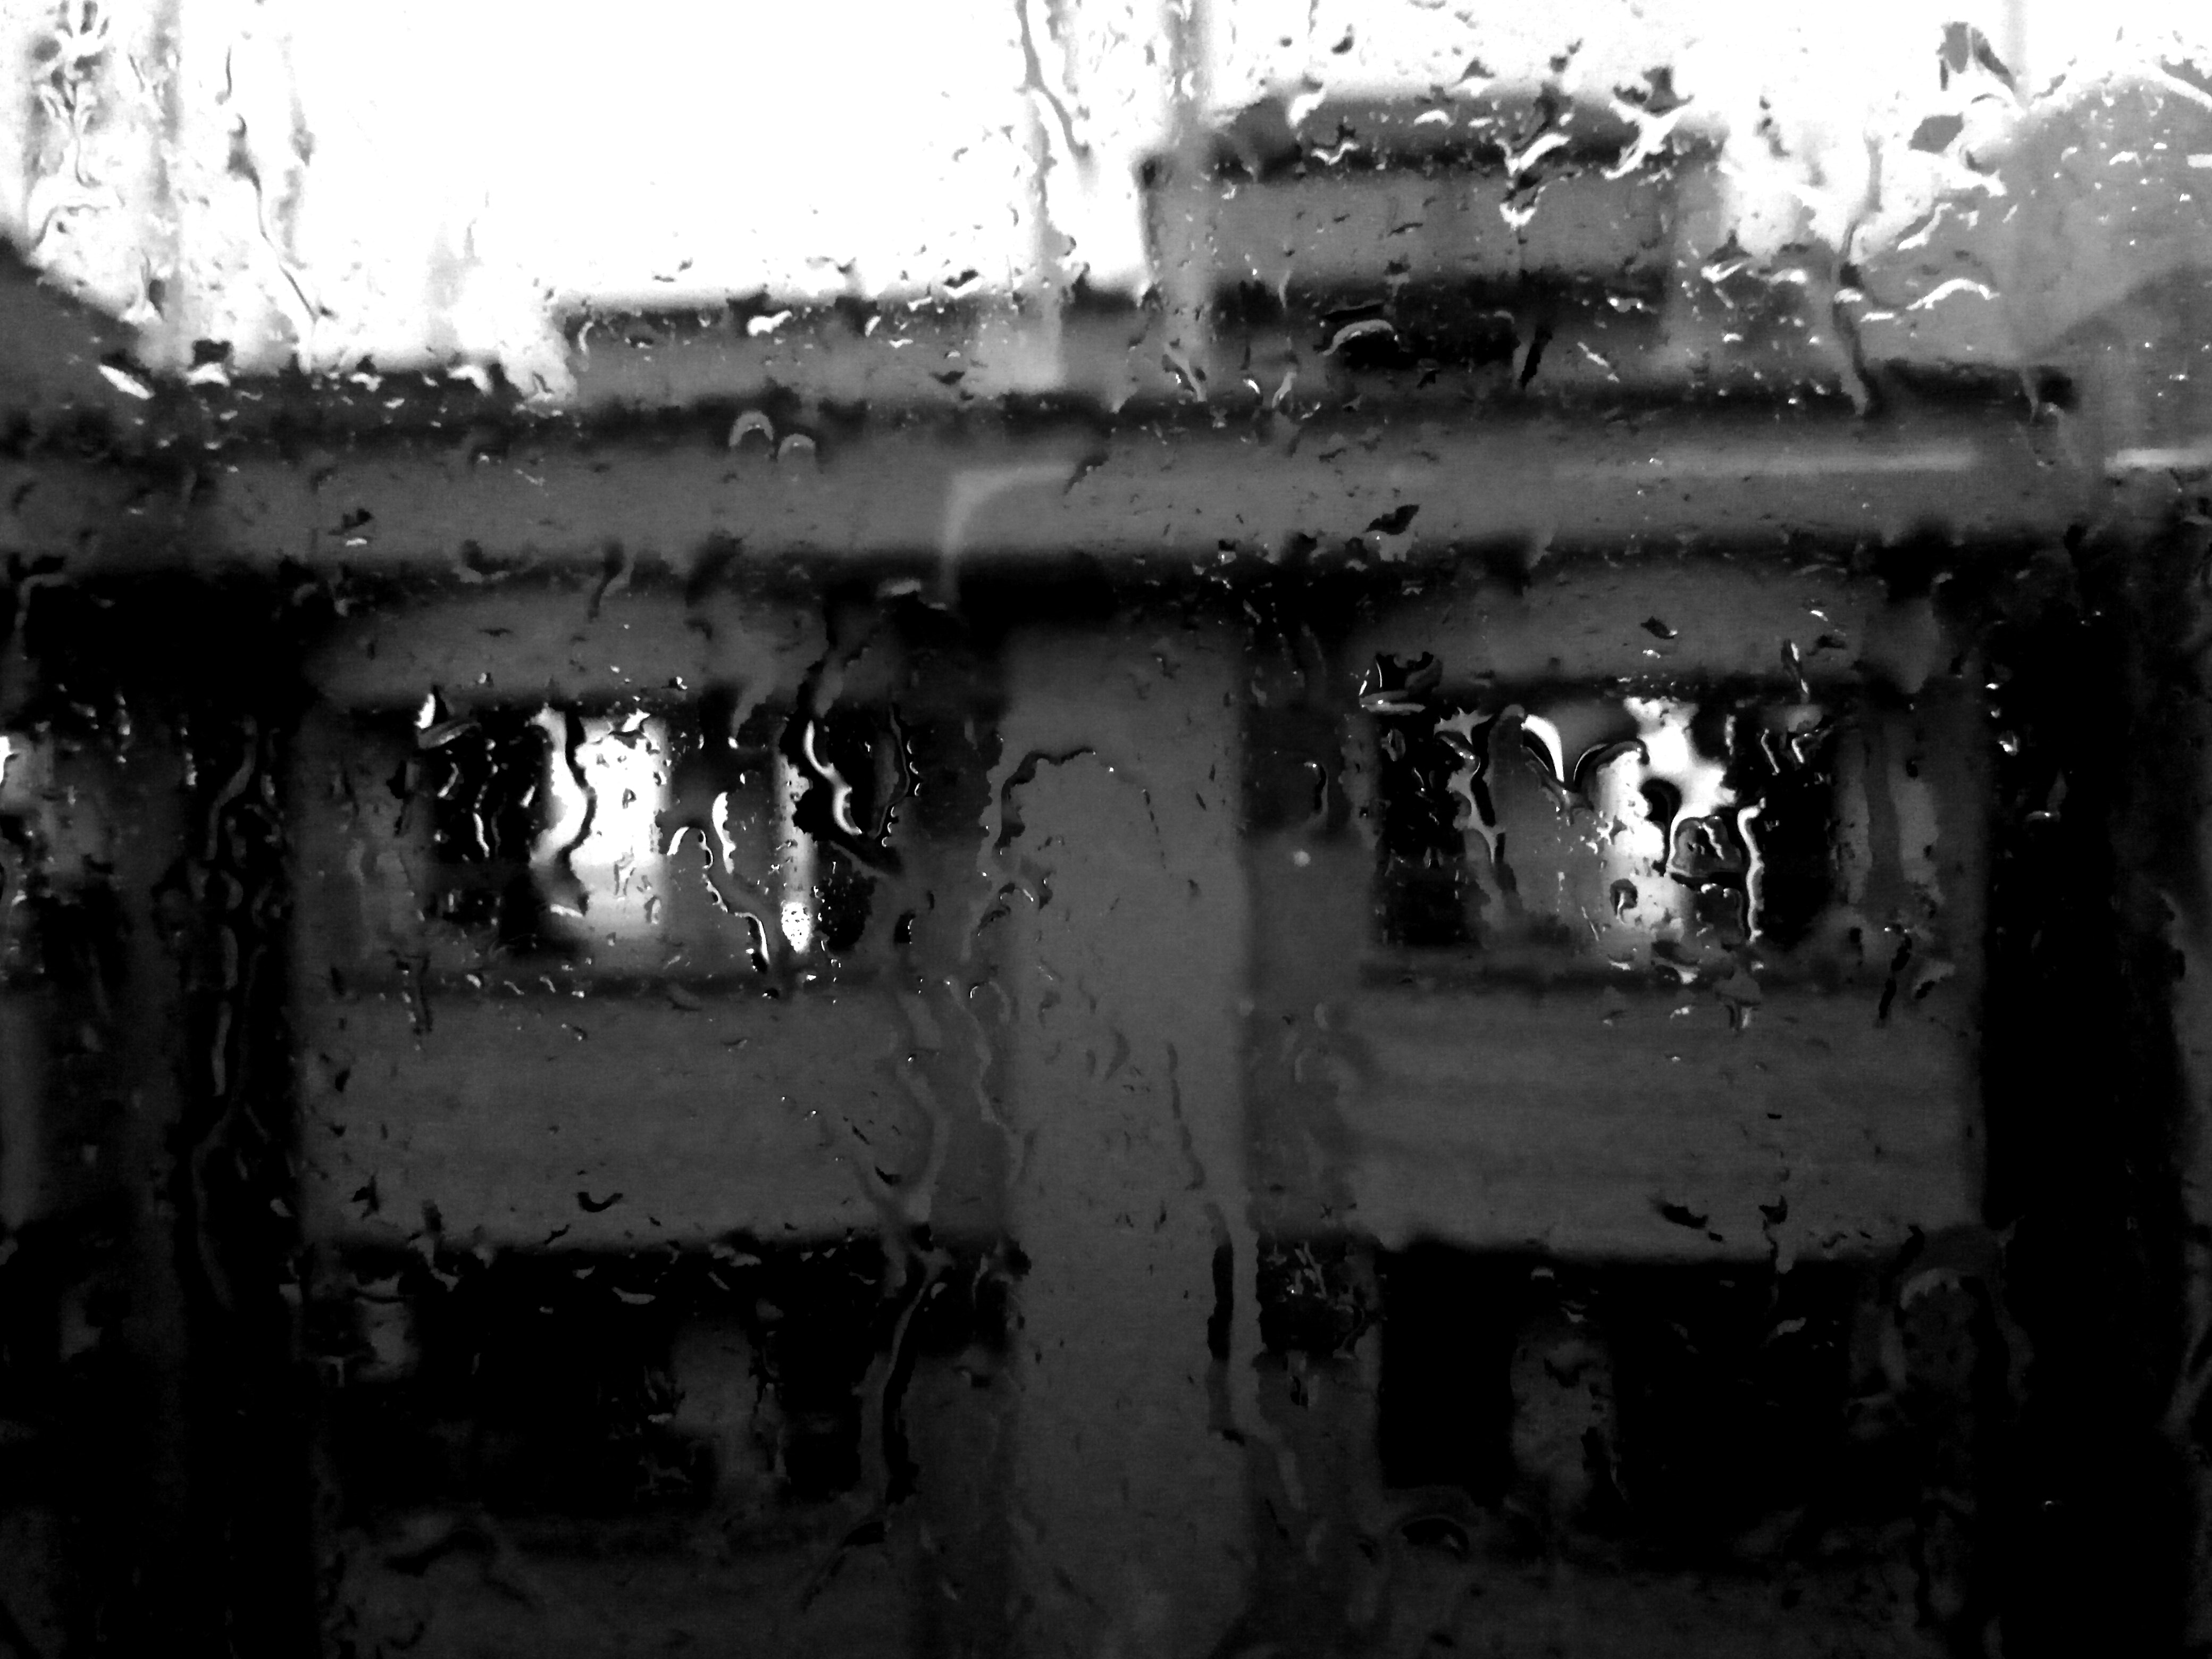 Rain Pouring on Glass Window, Blur, Building, Dark, Depth of field, HQ Photo